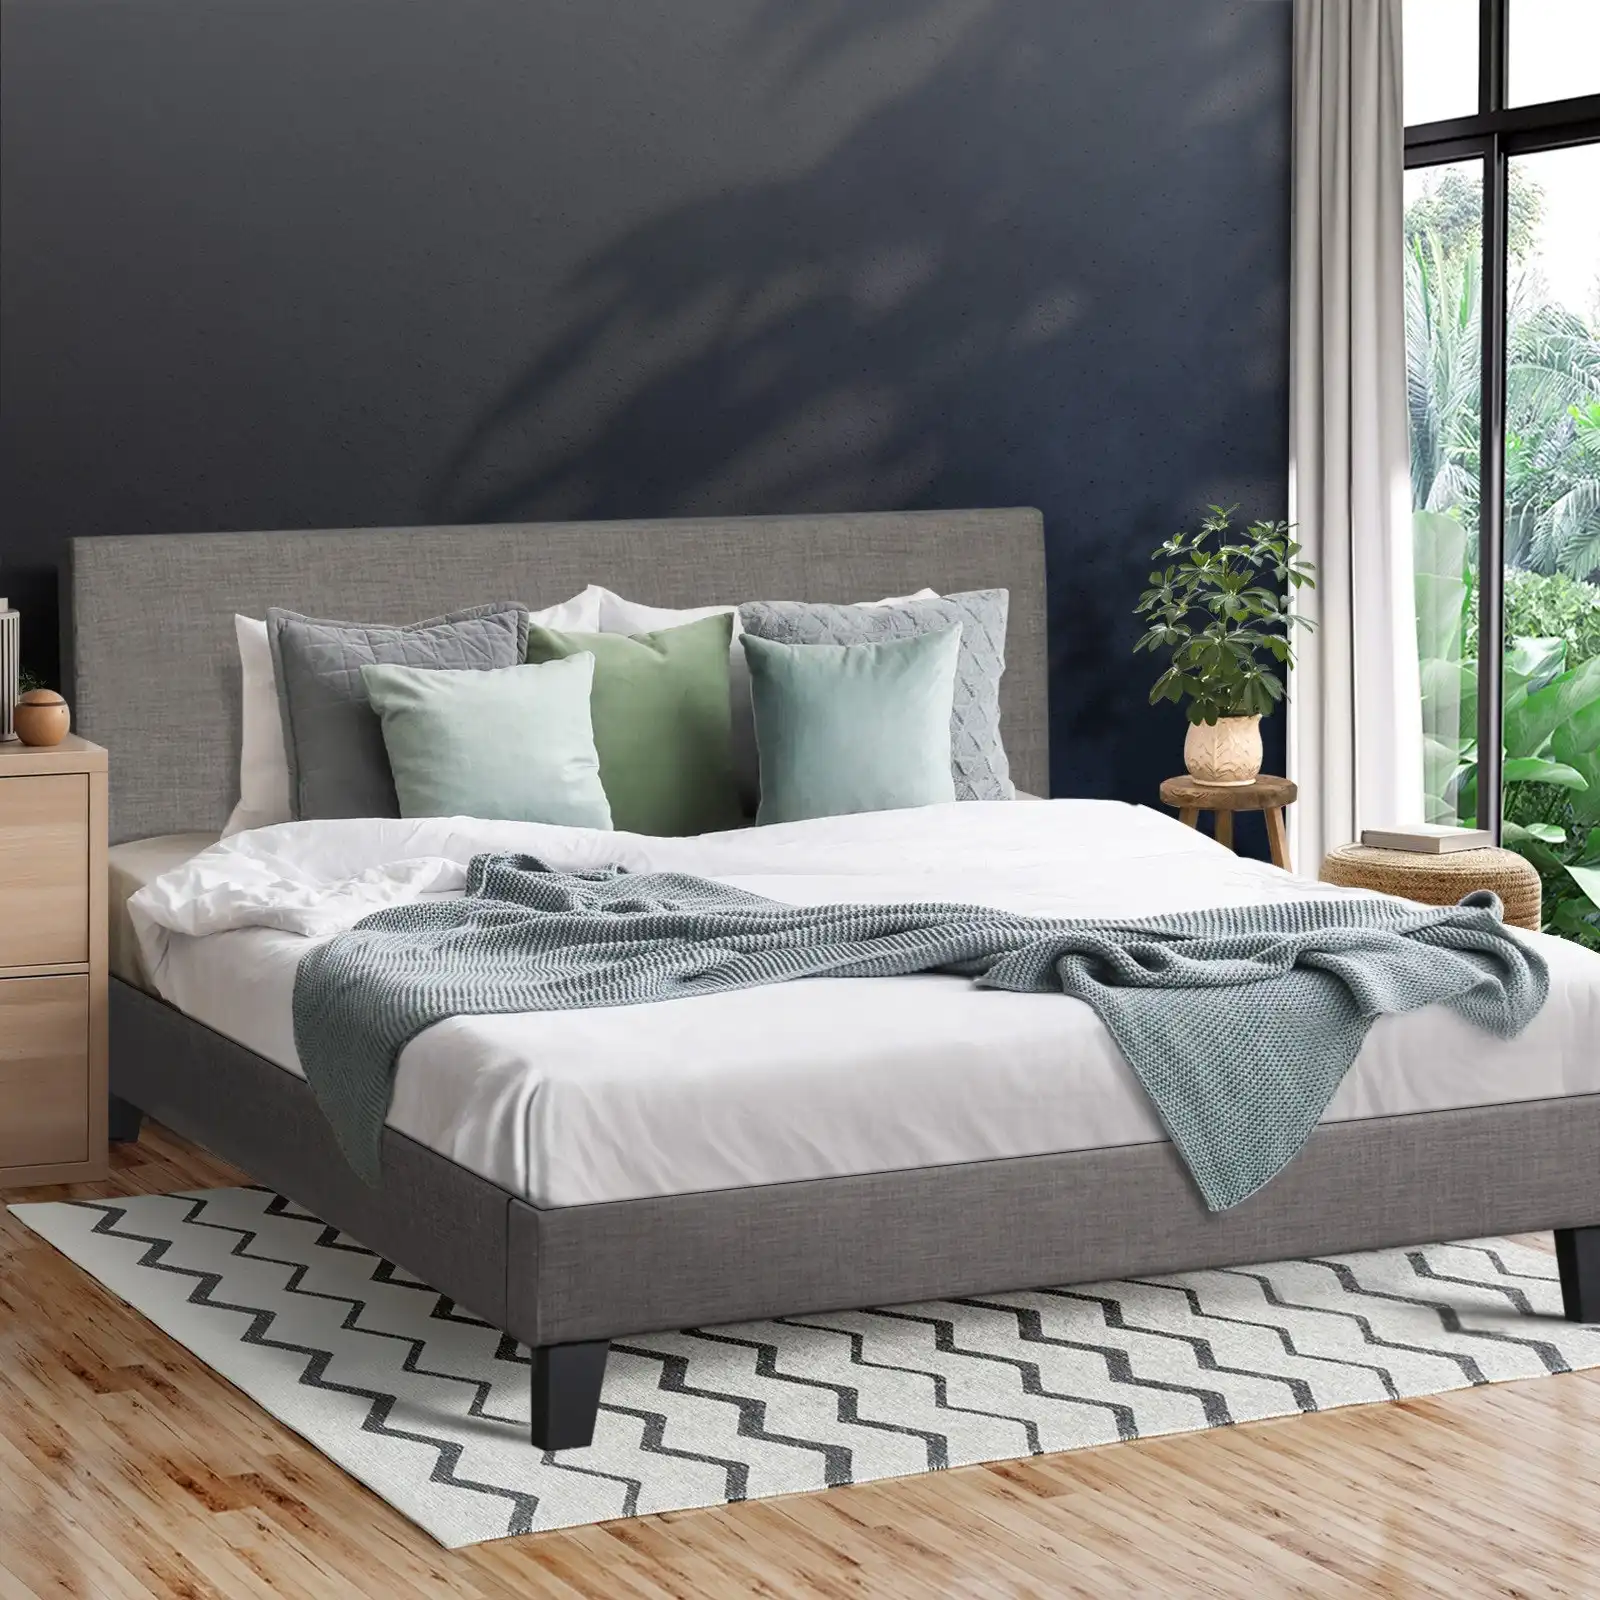 Oikiture Bed Frame Double Size Mattress Base Platform Wooden Slats Grey Fabric